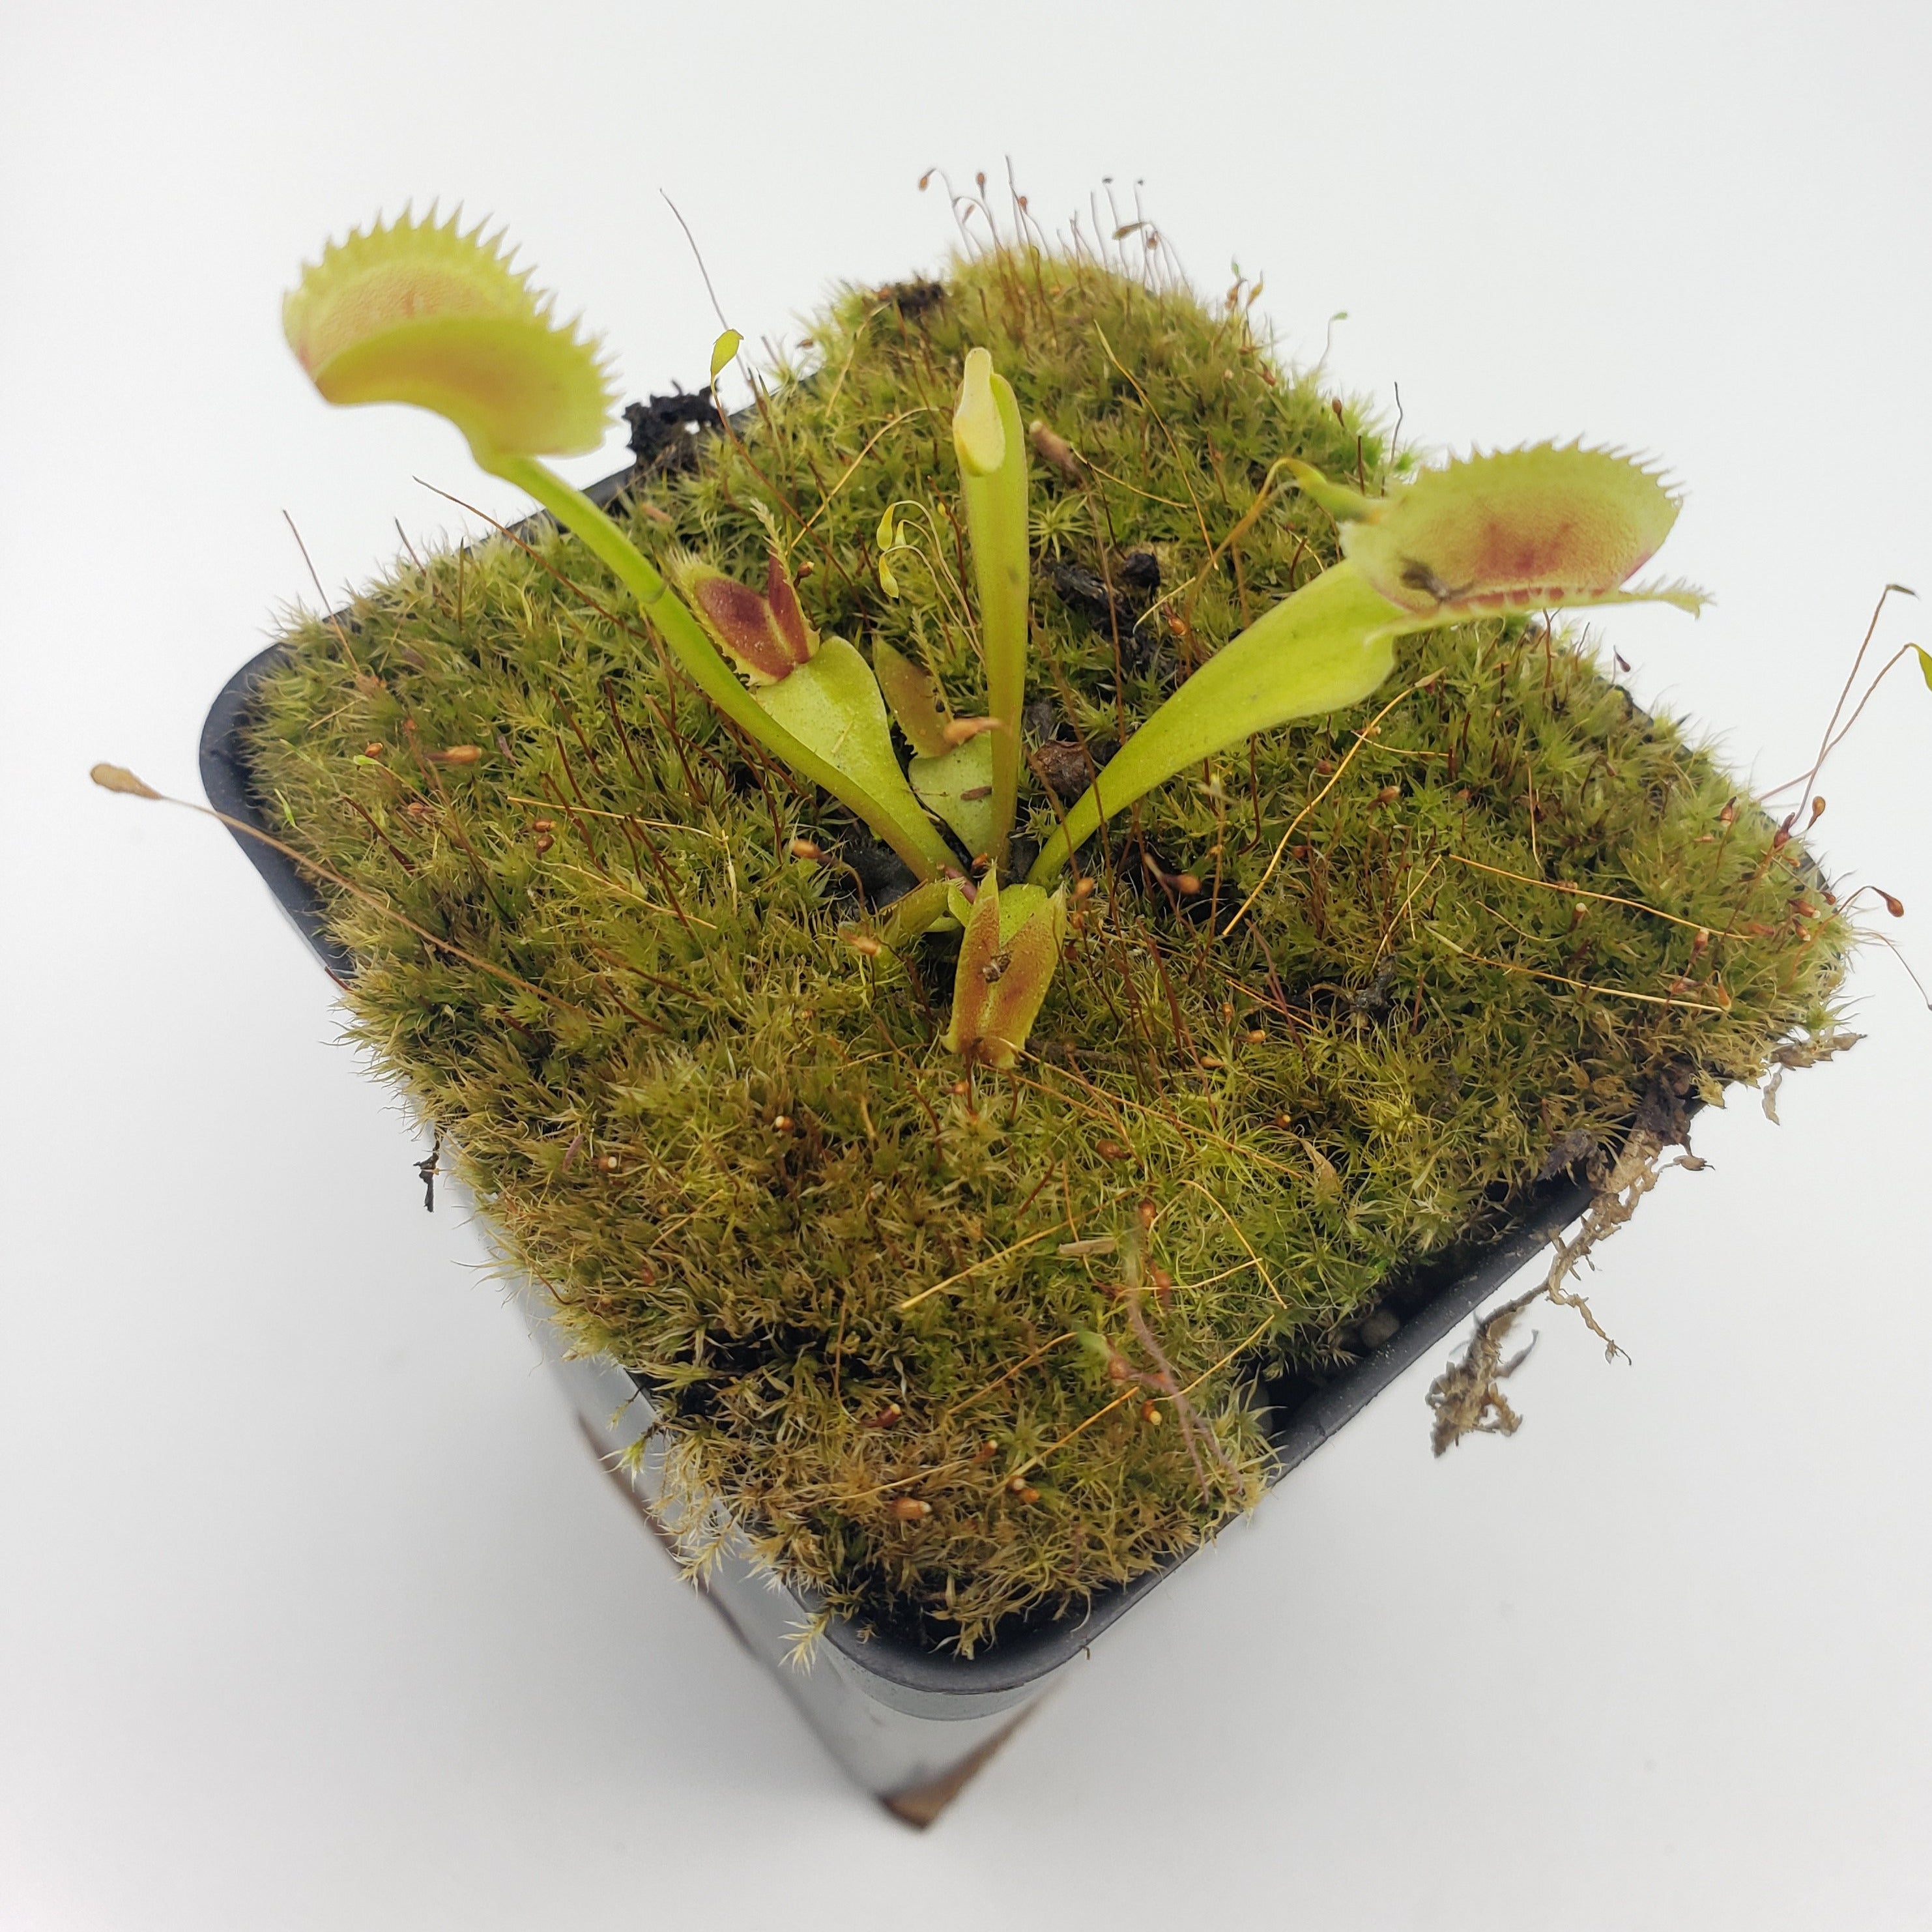 Venus flytrap (Dionaea muscipula) "Vitiligo" - Rainbow Carnivorous Plants LLC